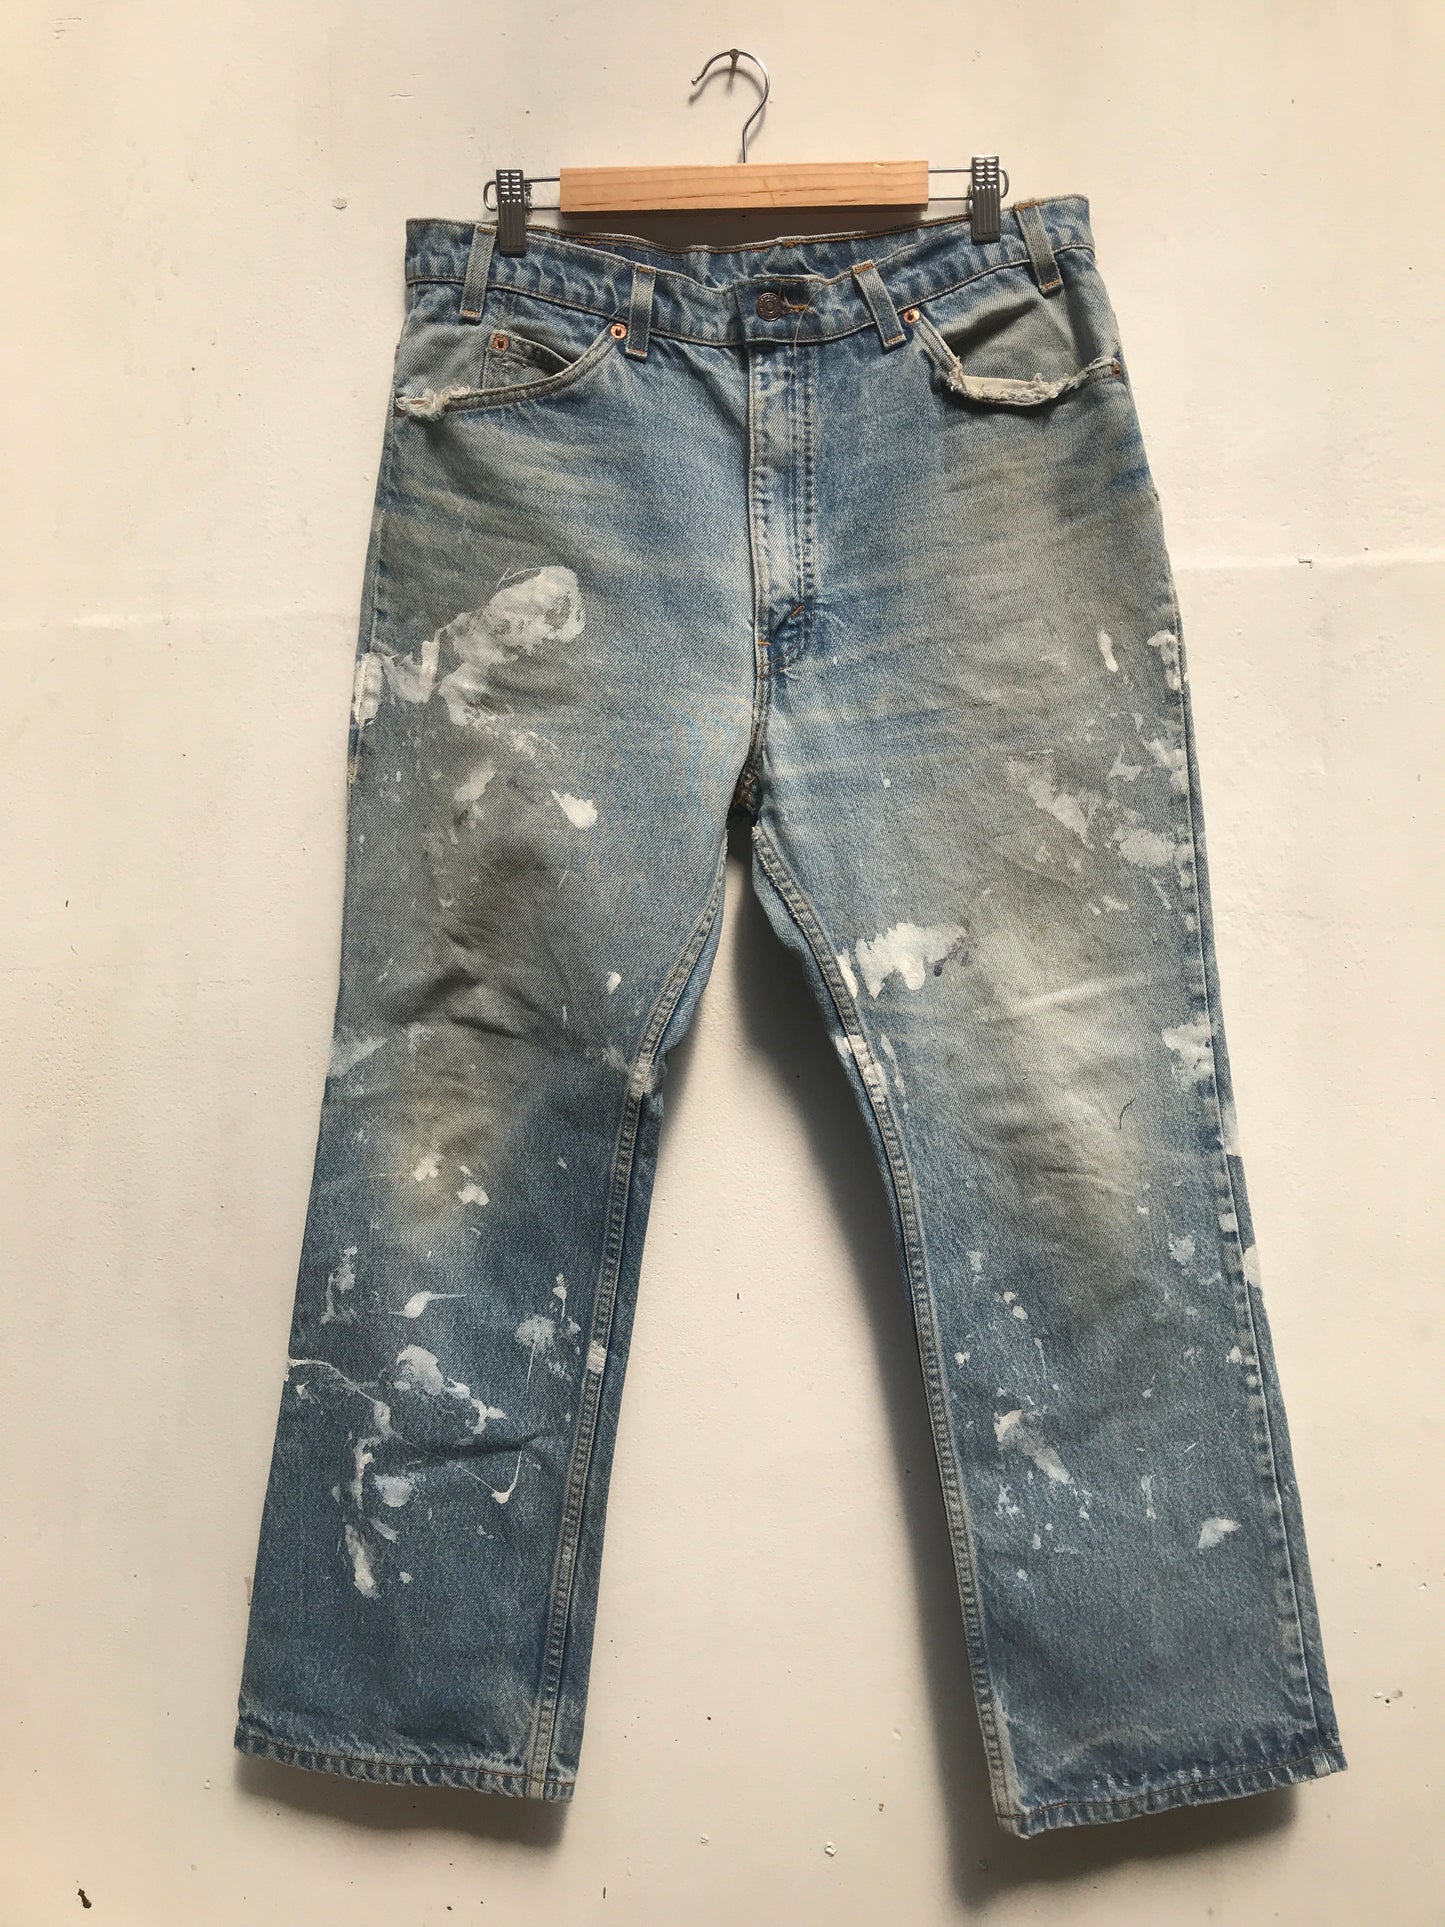 Levi's 575 Vintage Jeans (Orange Label)